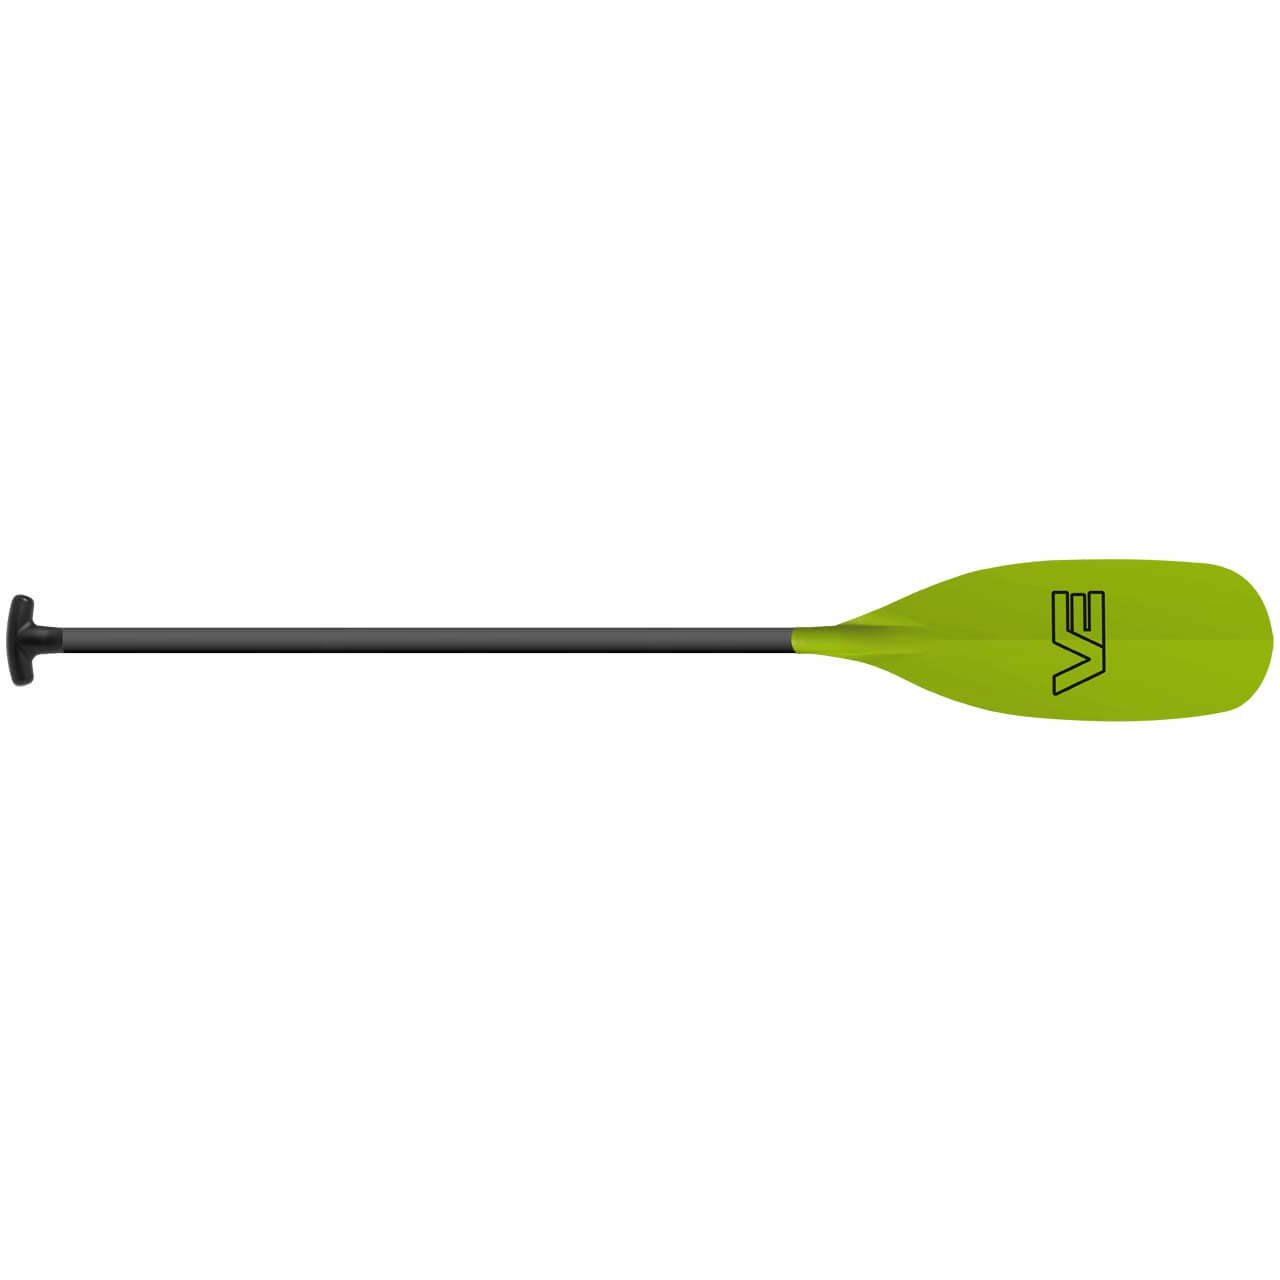 VE Offside Stechpaddel 1pc - Green, Uncut von VE Paddles}